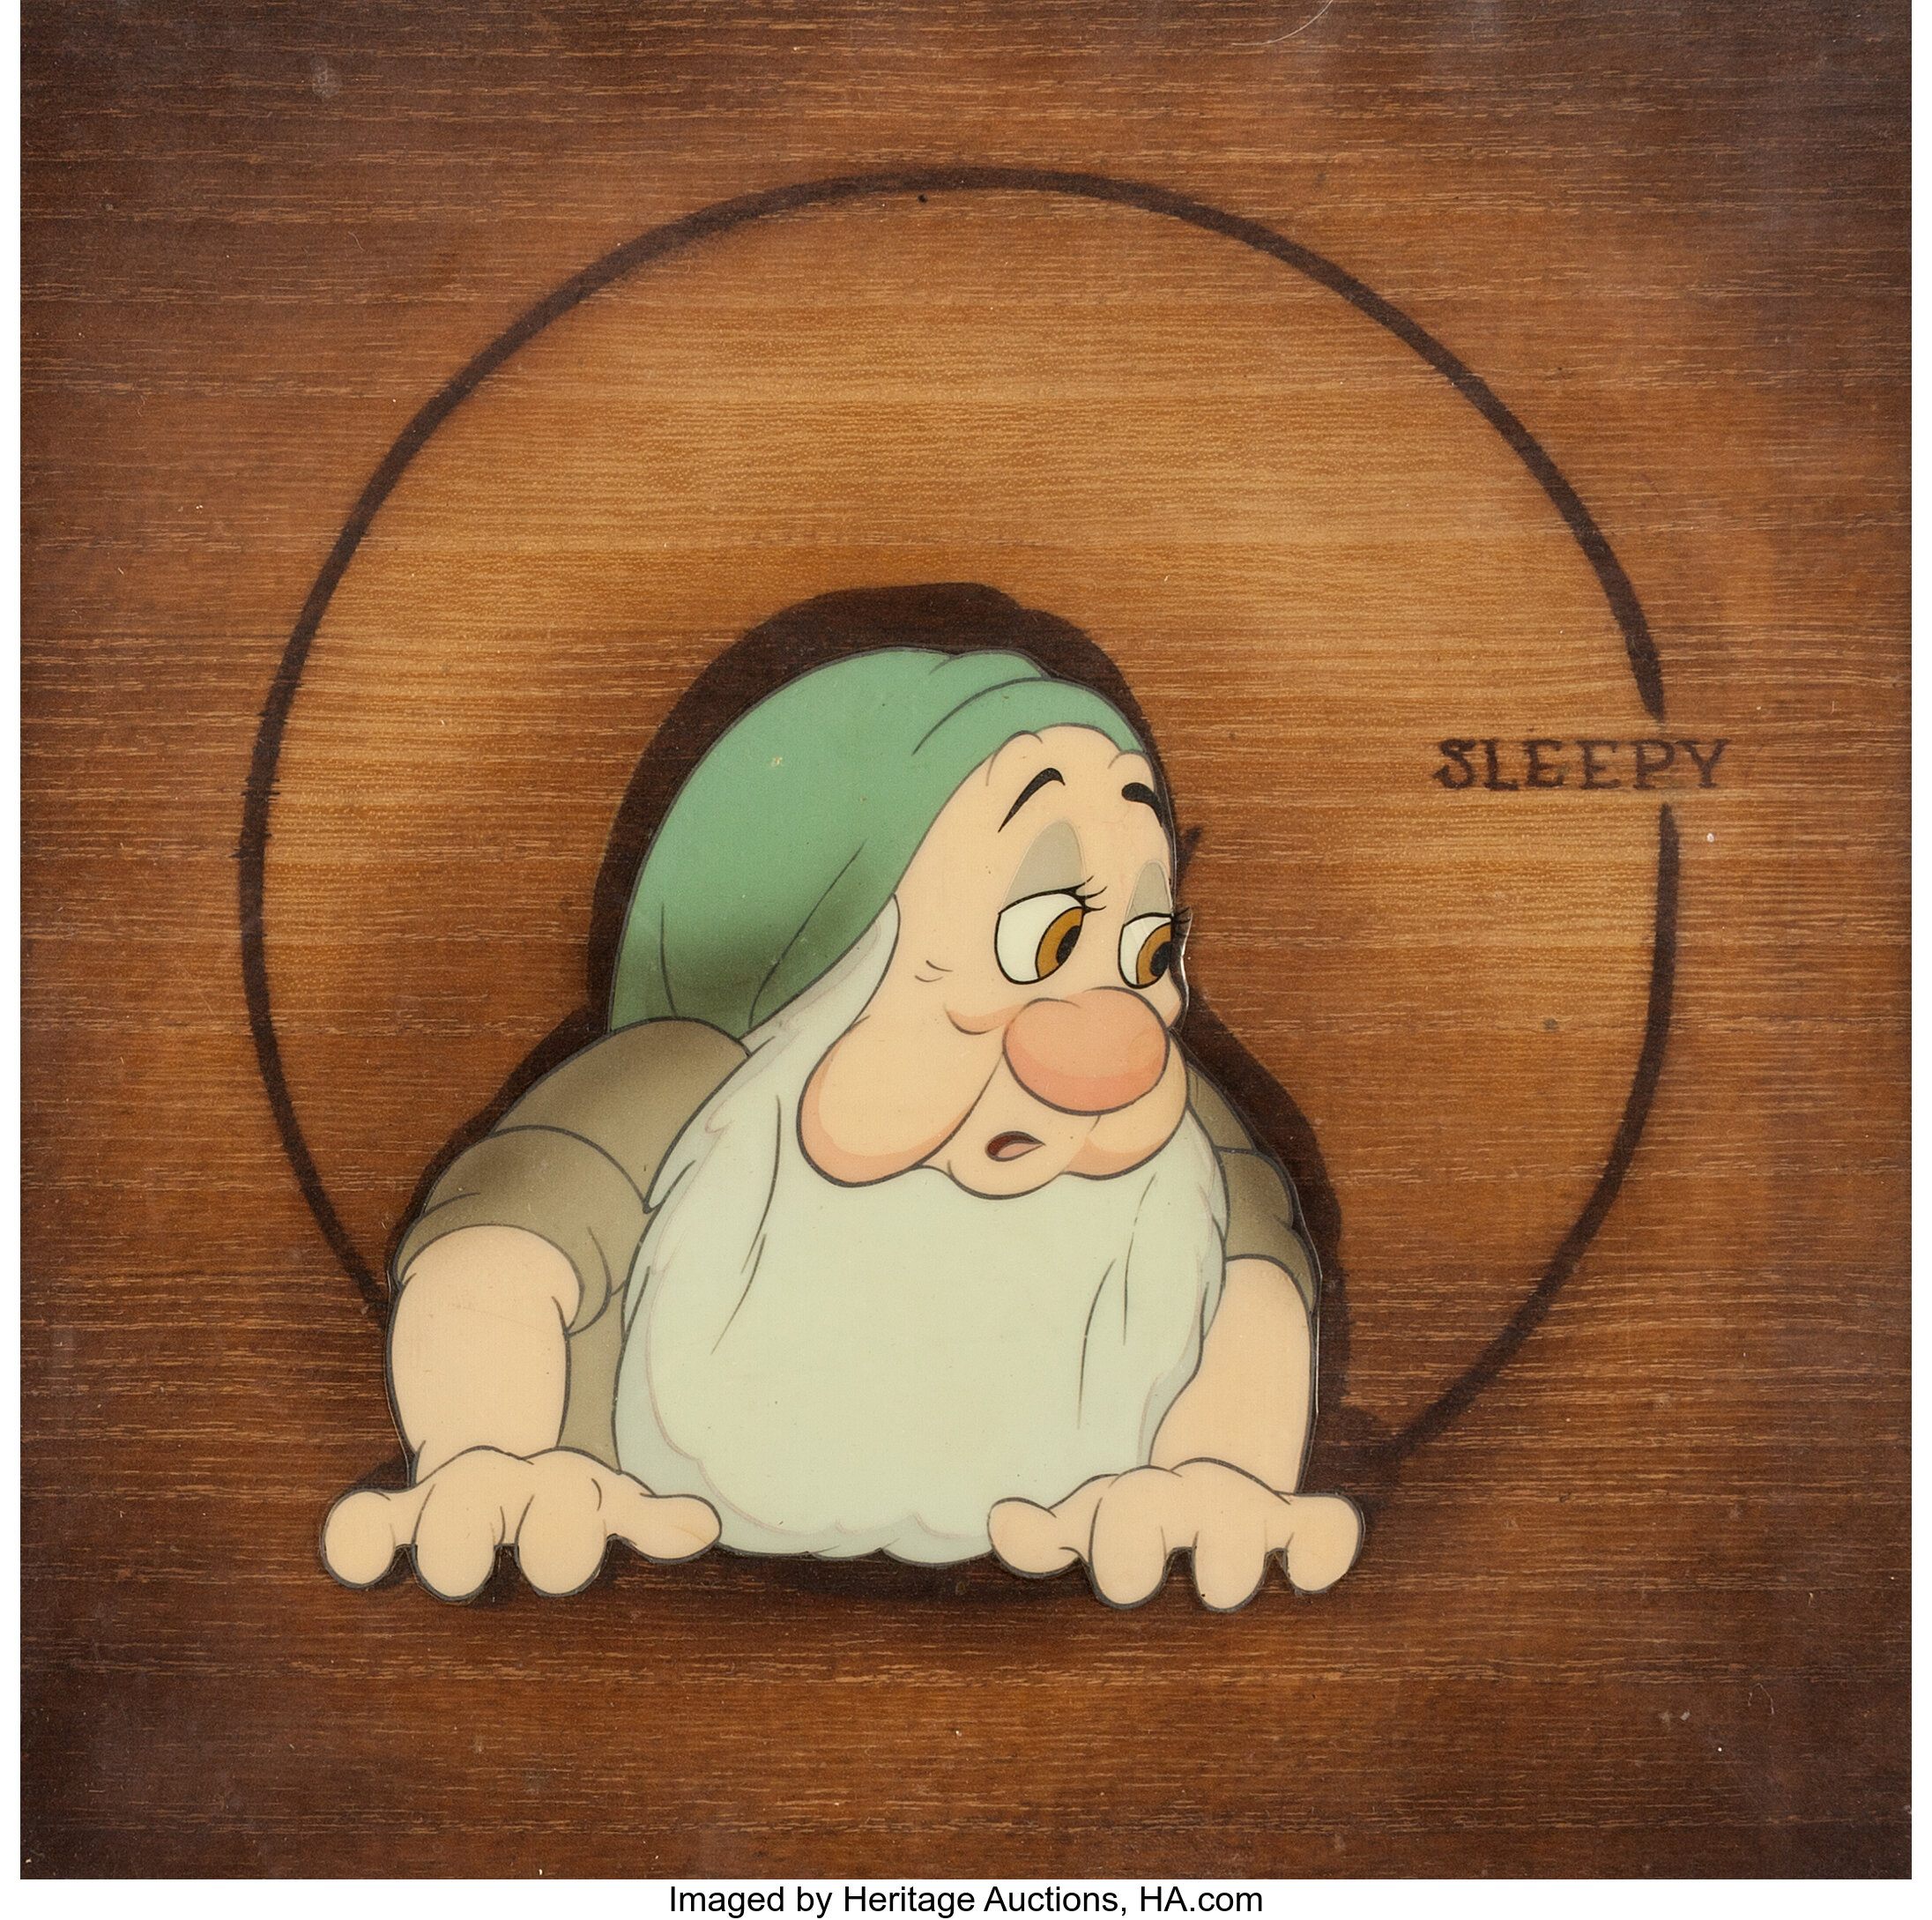 Snow White And The Seven Dwarfs Sleepy Production Cel Courvoisier Lot 95041 Heritage Auctions 